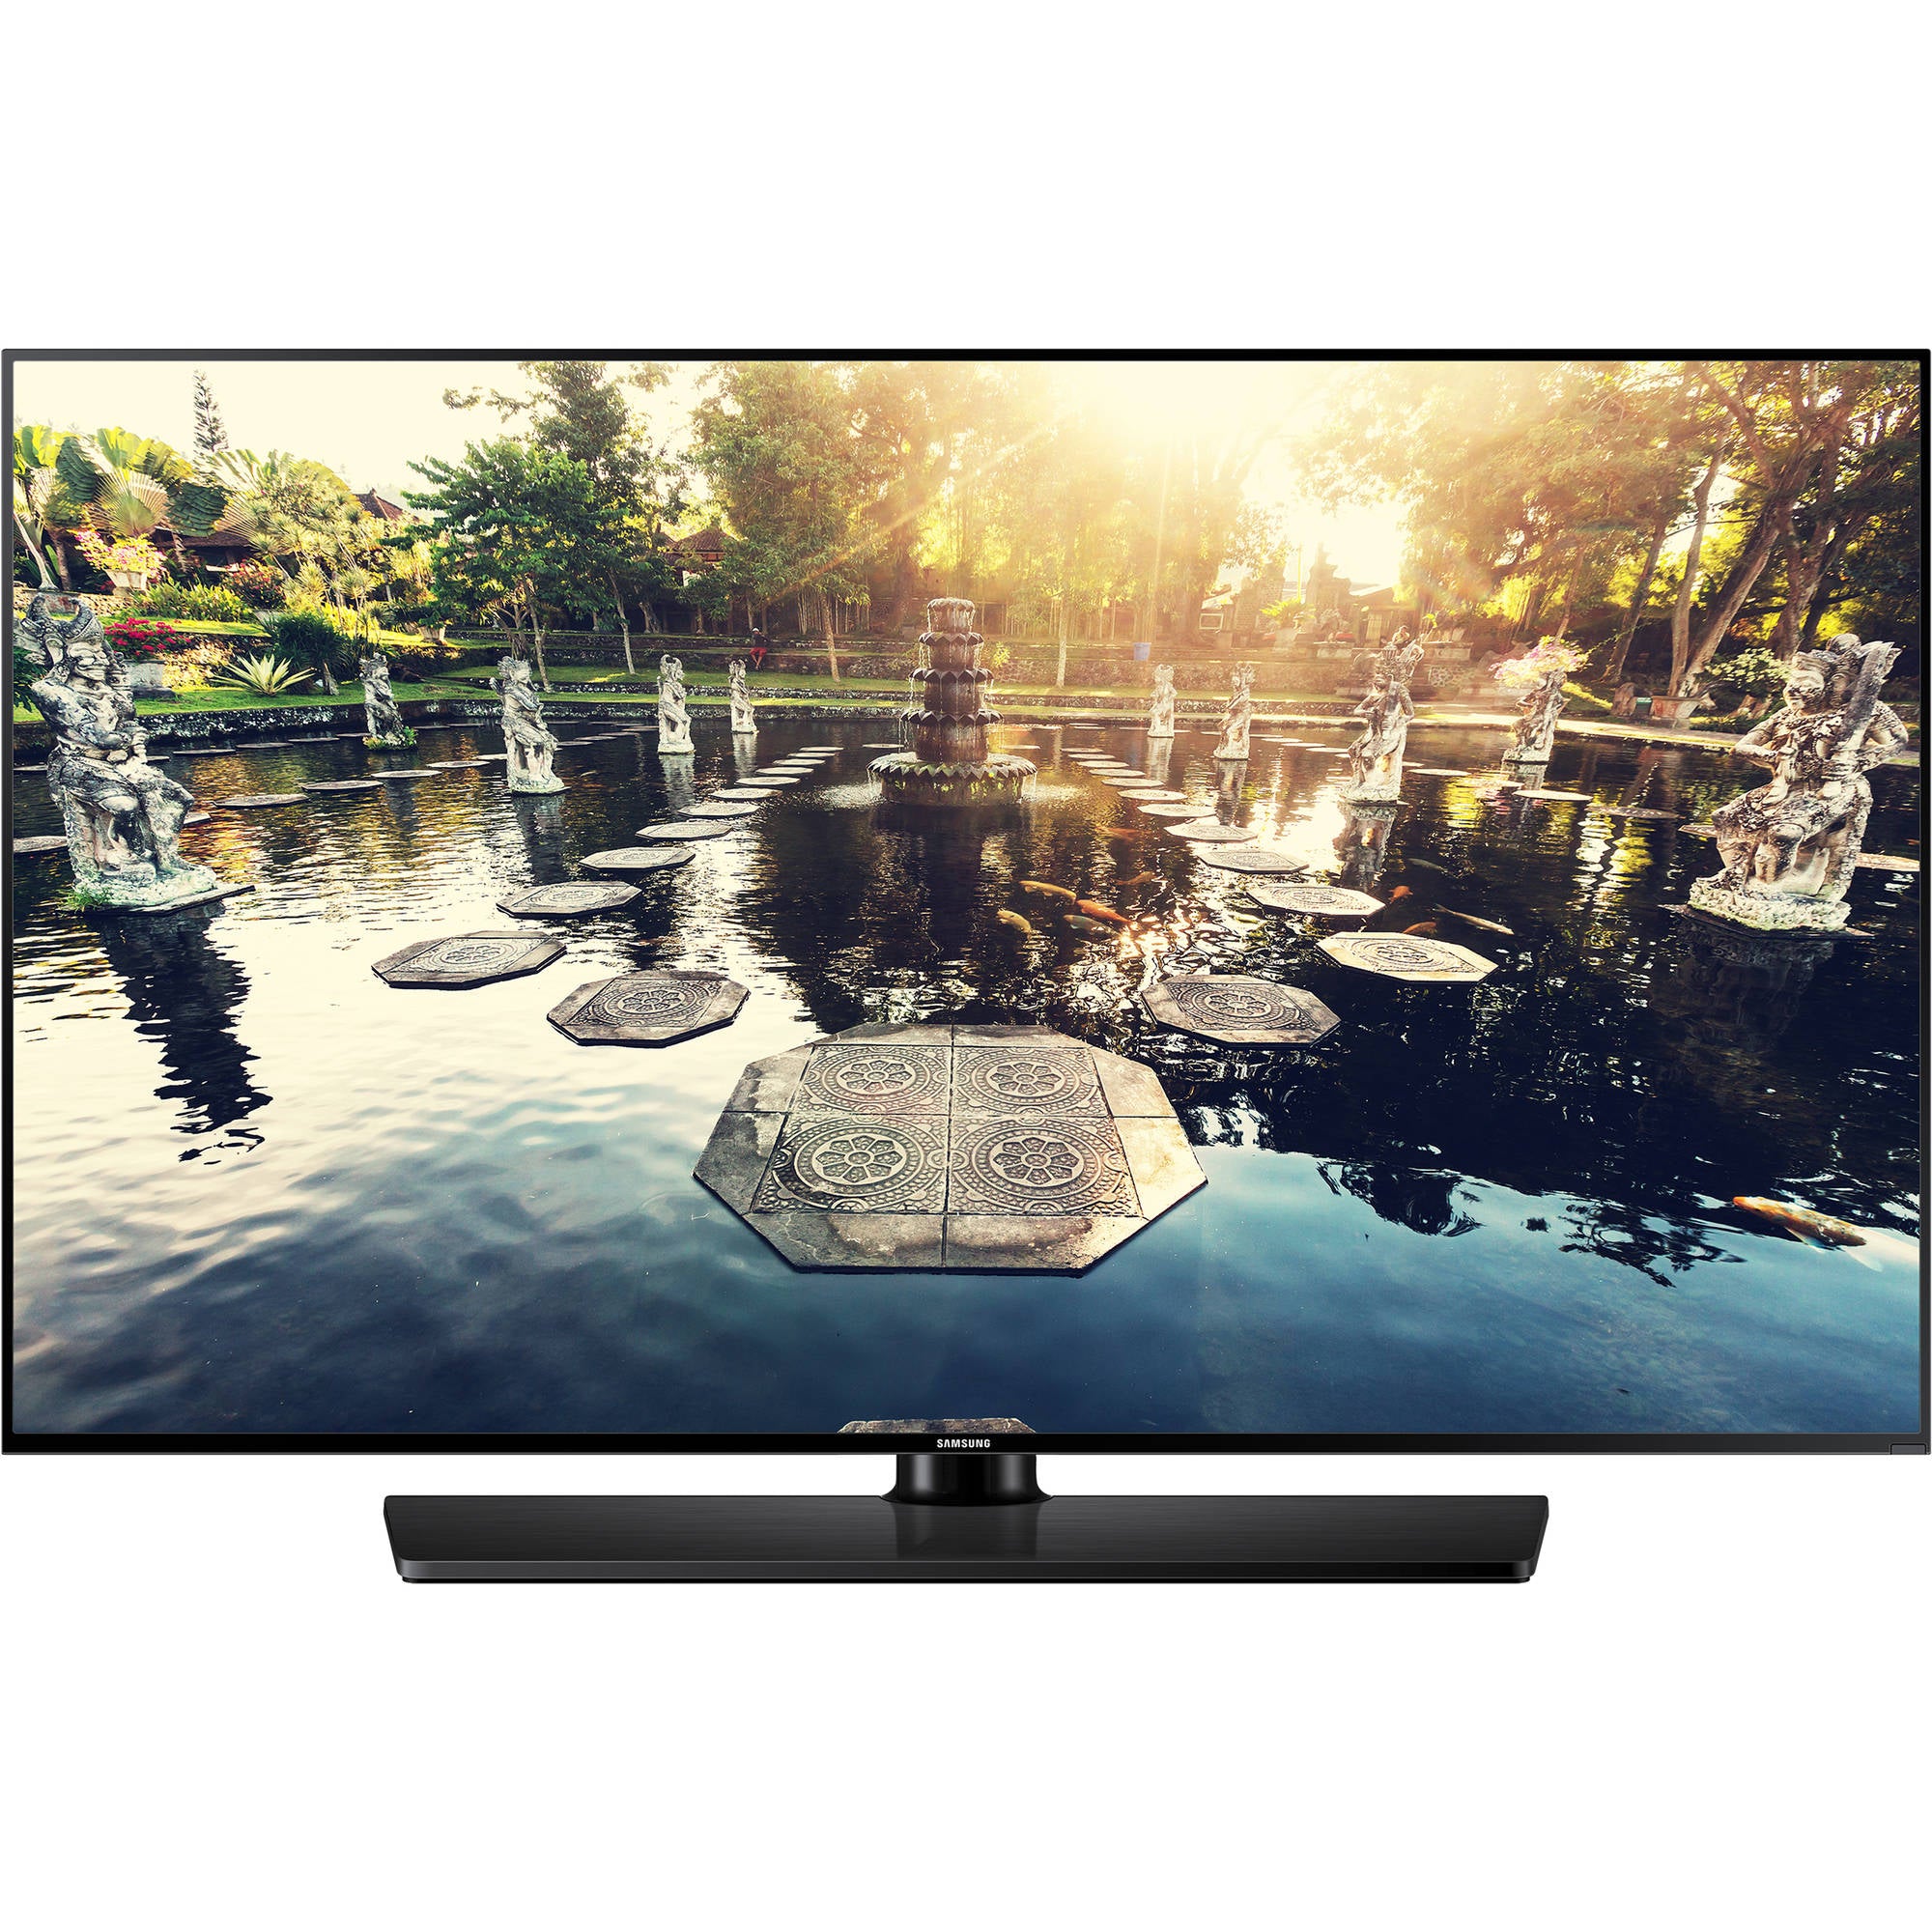 Samsung HG60NE690EFXZA 60" Full HD Slim Direct-Lit LED Hospitality Smart TV with Built-in Wi-Fi (Black) - Samsung Parts USA